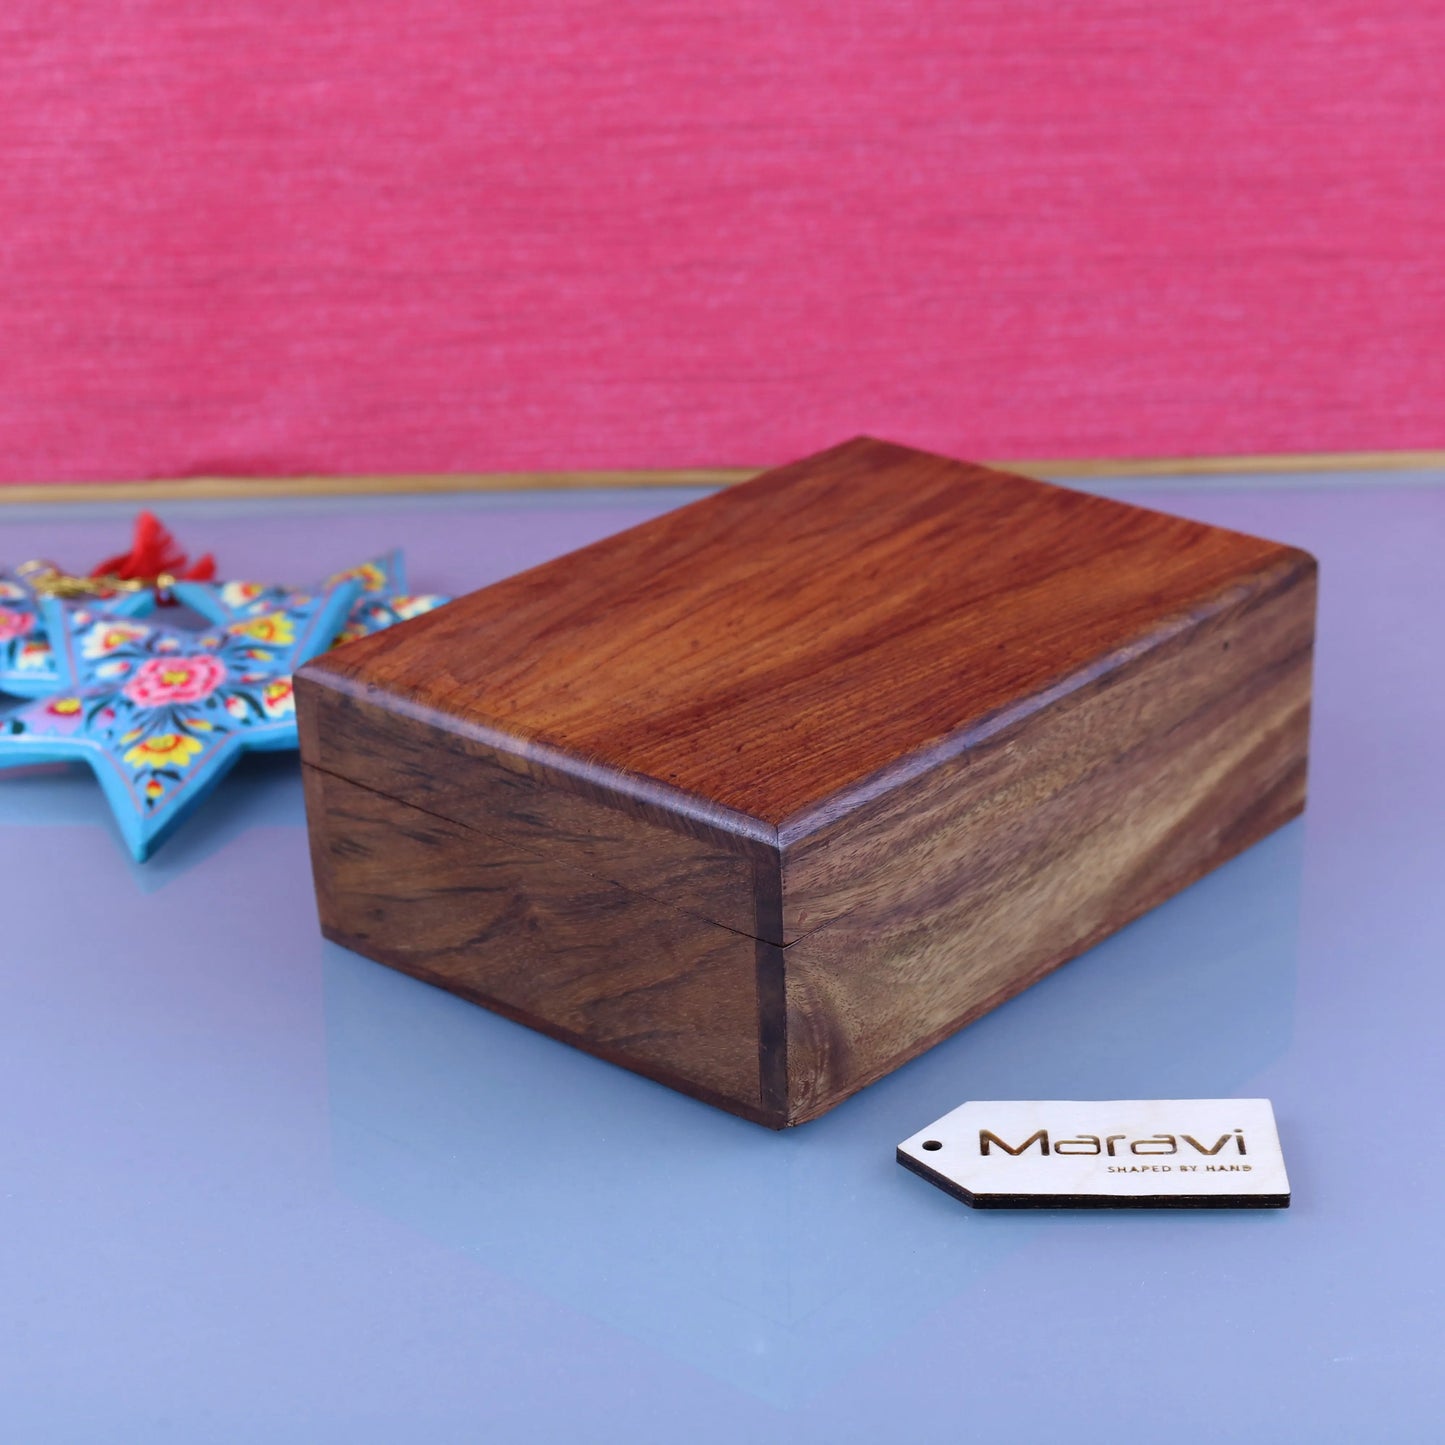 Khalka Plain Wooden Storage Boxes Medium Side View